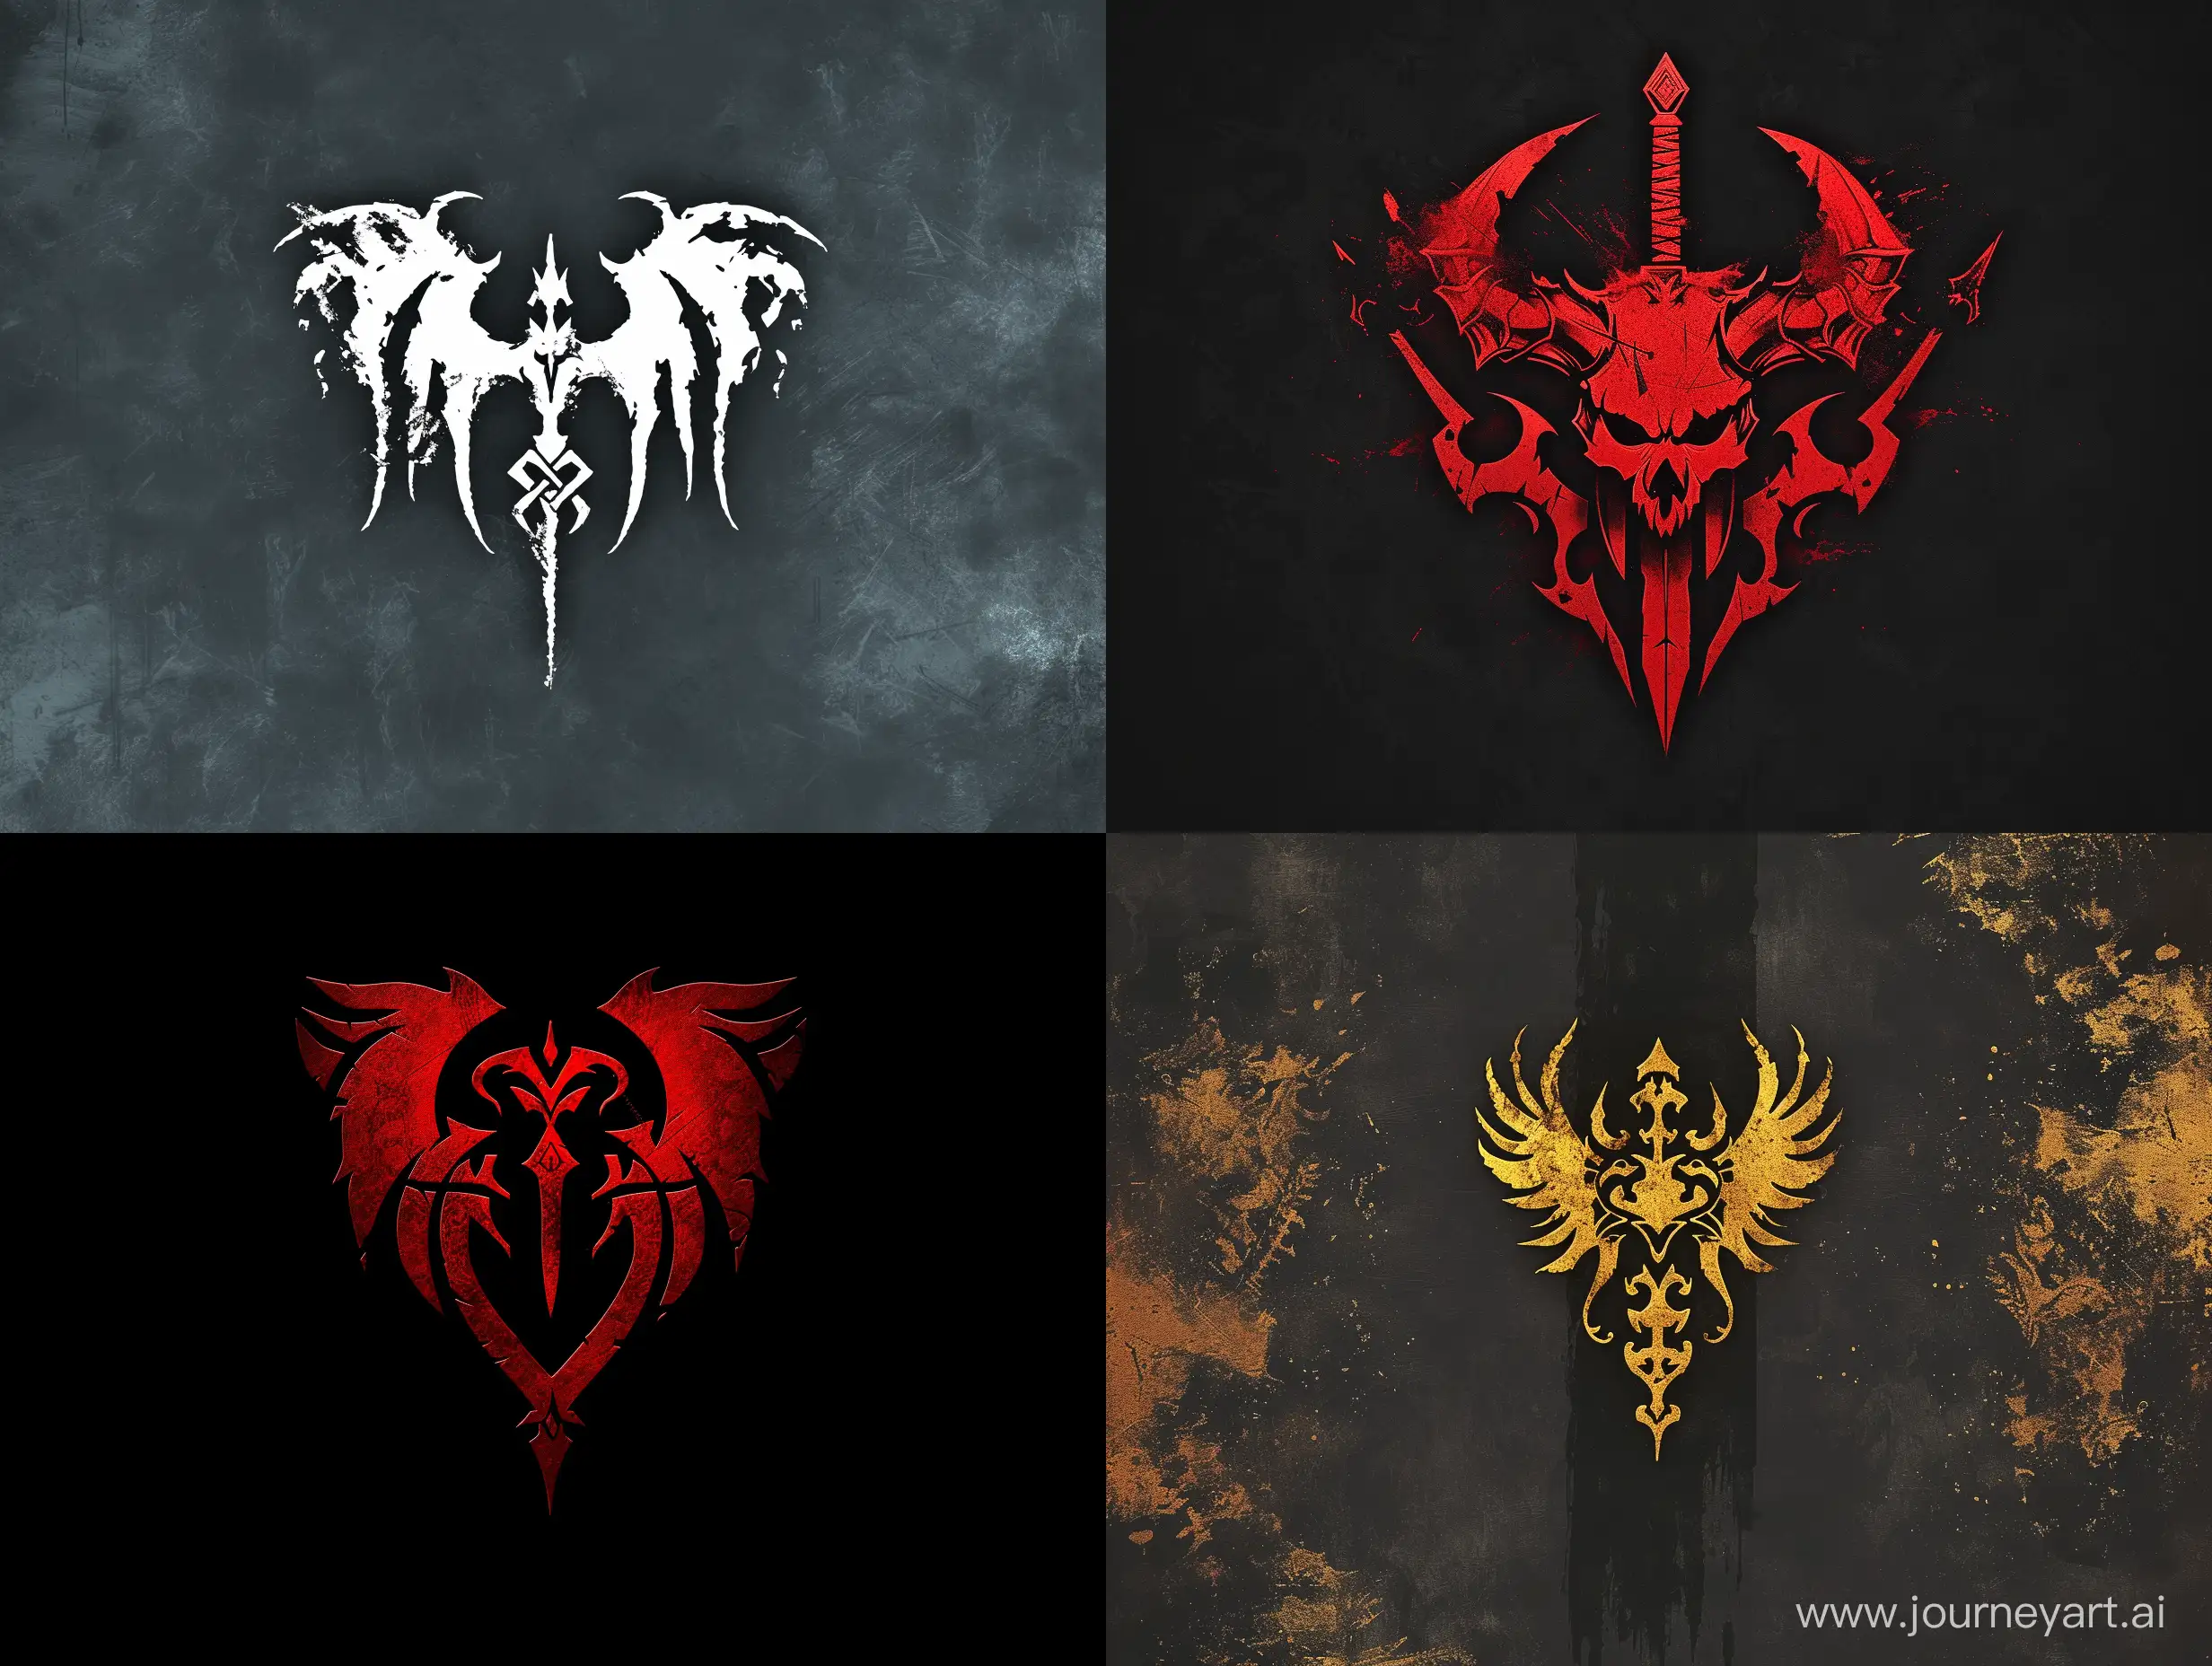 Mystical-Dark-Tailos-Guild-Logo-with-Version-6-Aspect-Ratio-43-and-Unique-Design